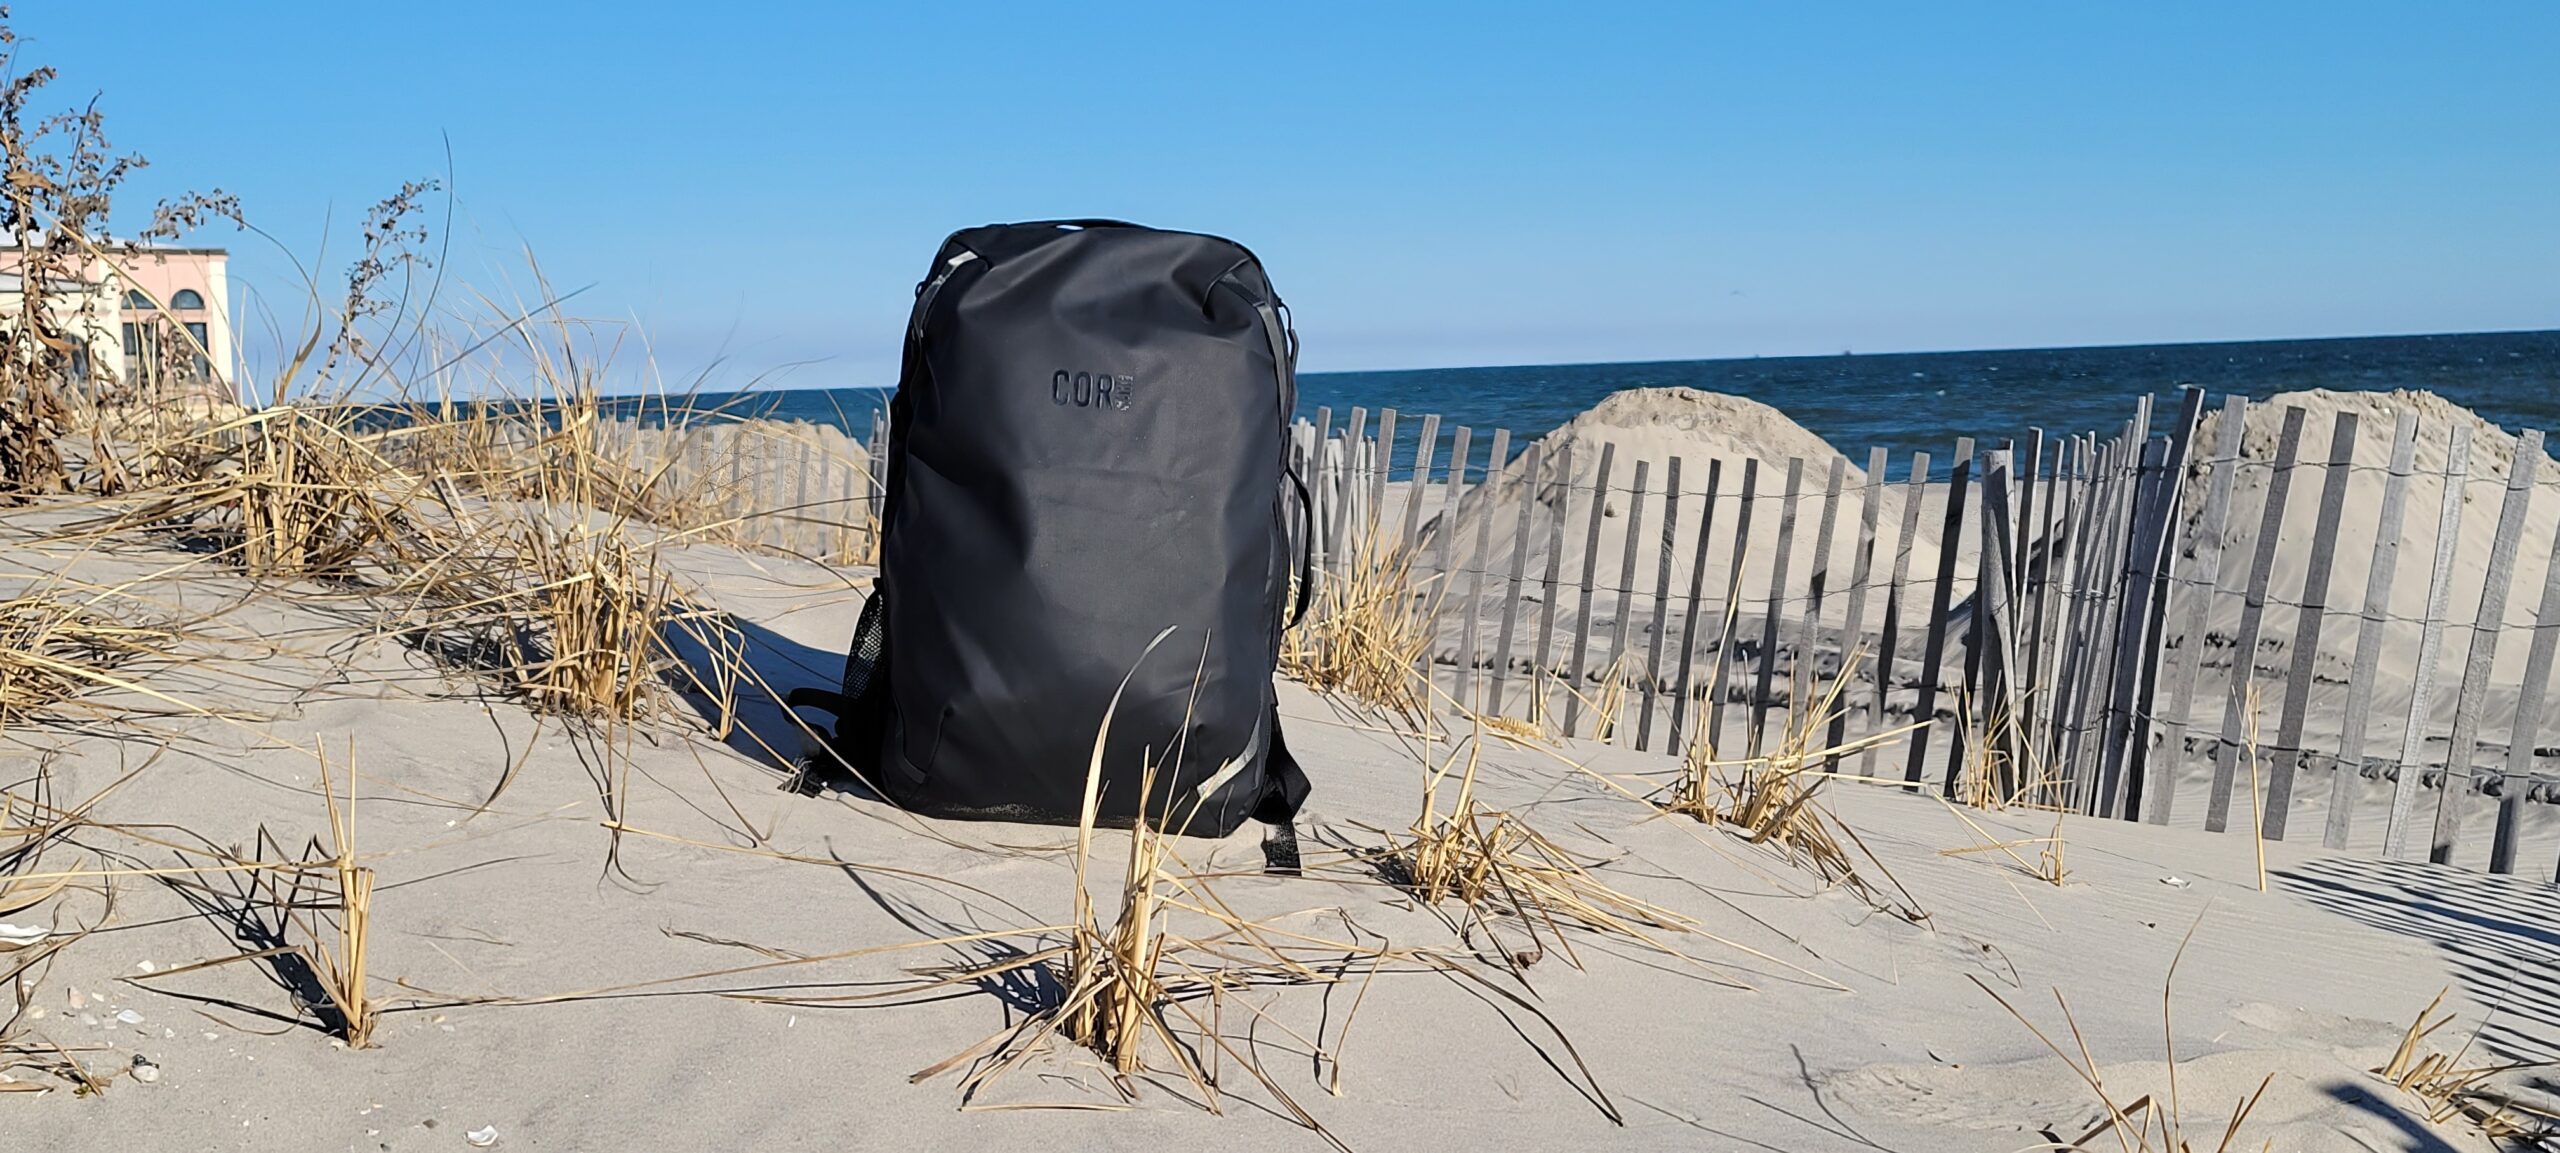 COR Surf Waterproof Dry Bag Lightweight Storage Bag Backpack for